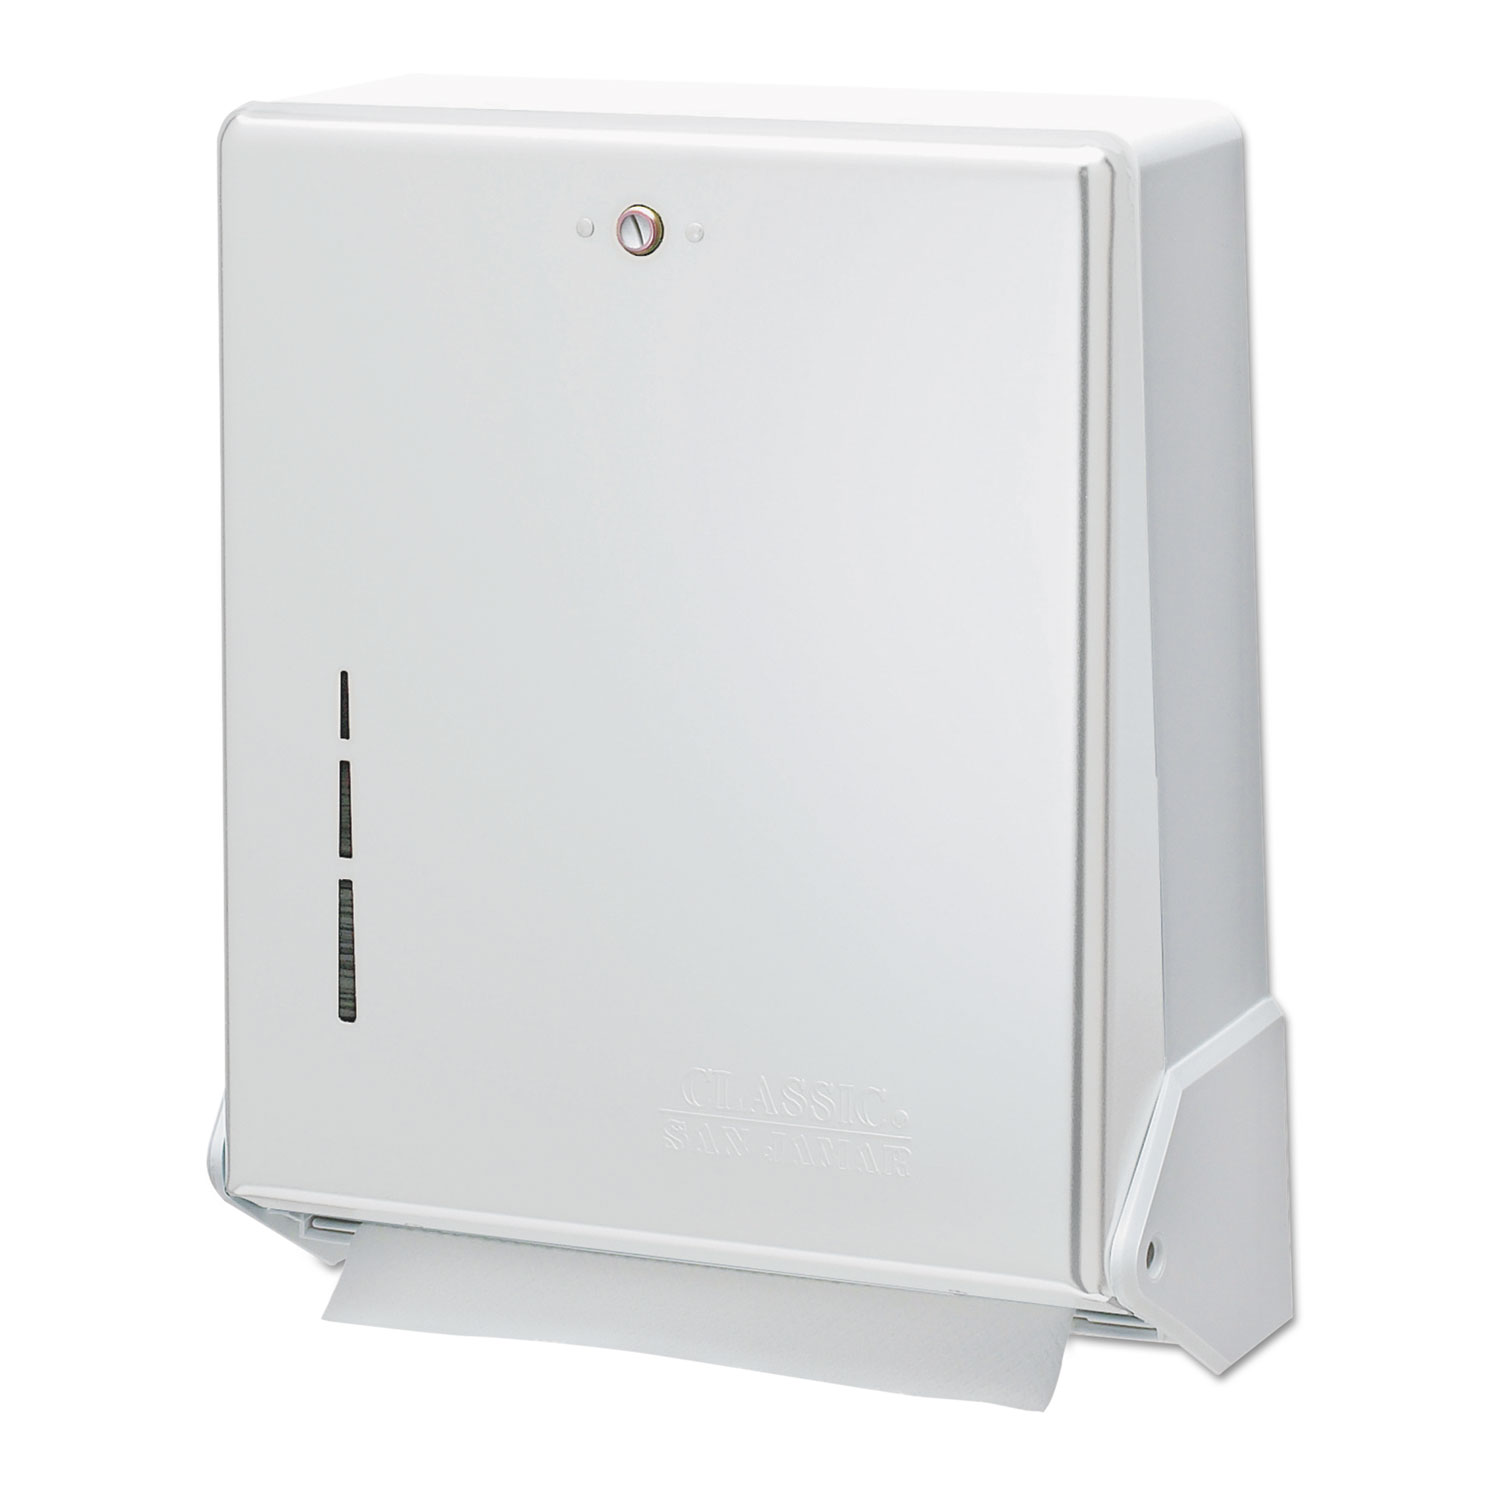  San Jamar T1905WH True Fold C-Fold/Multifold Paper Towel Dispenser, White, 11 5/8 x 5 x 14 1/2 (SJMT1905WH) 